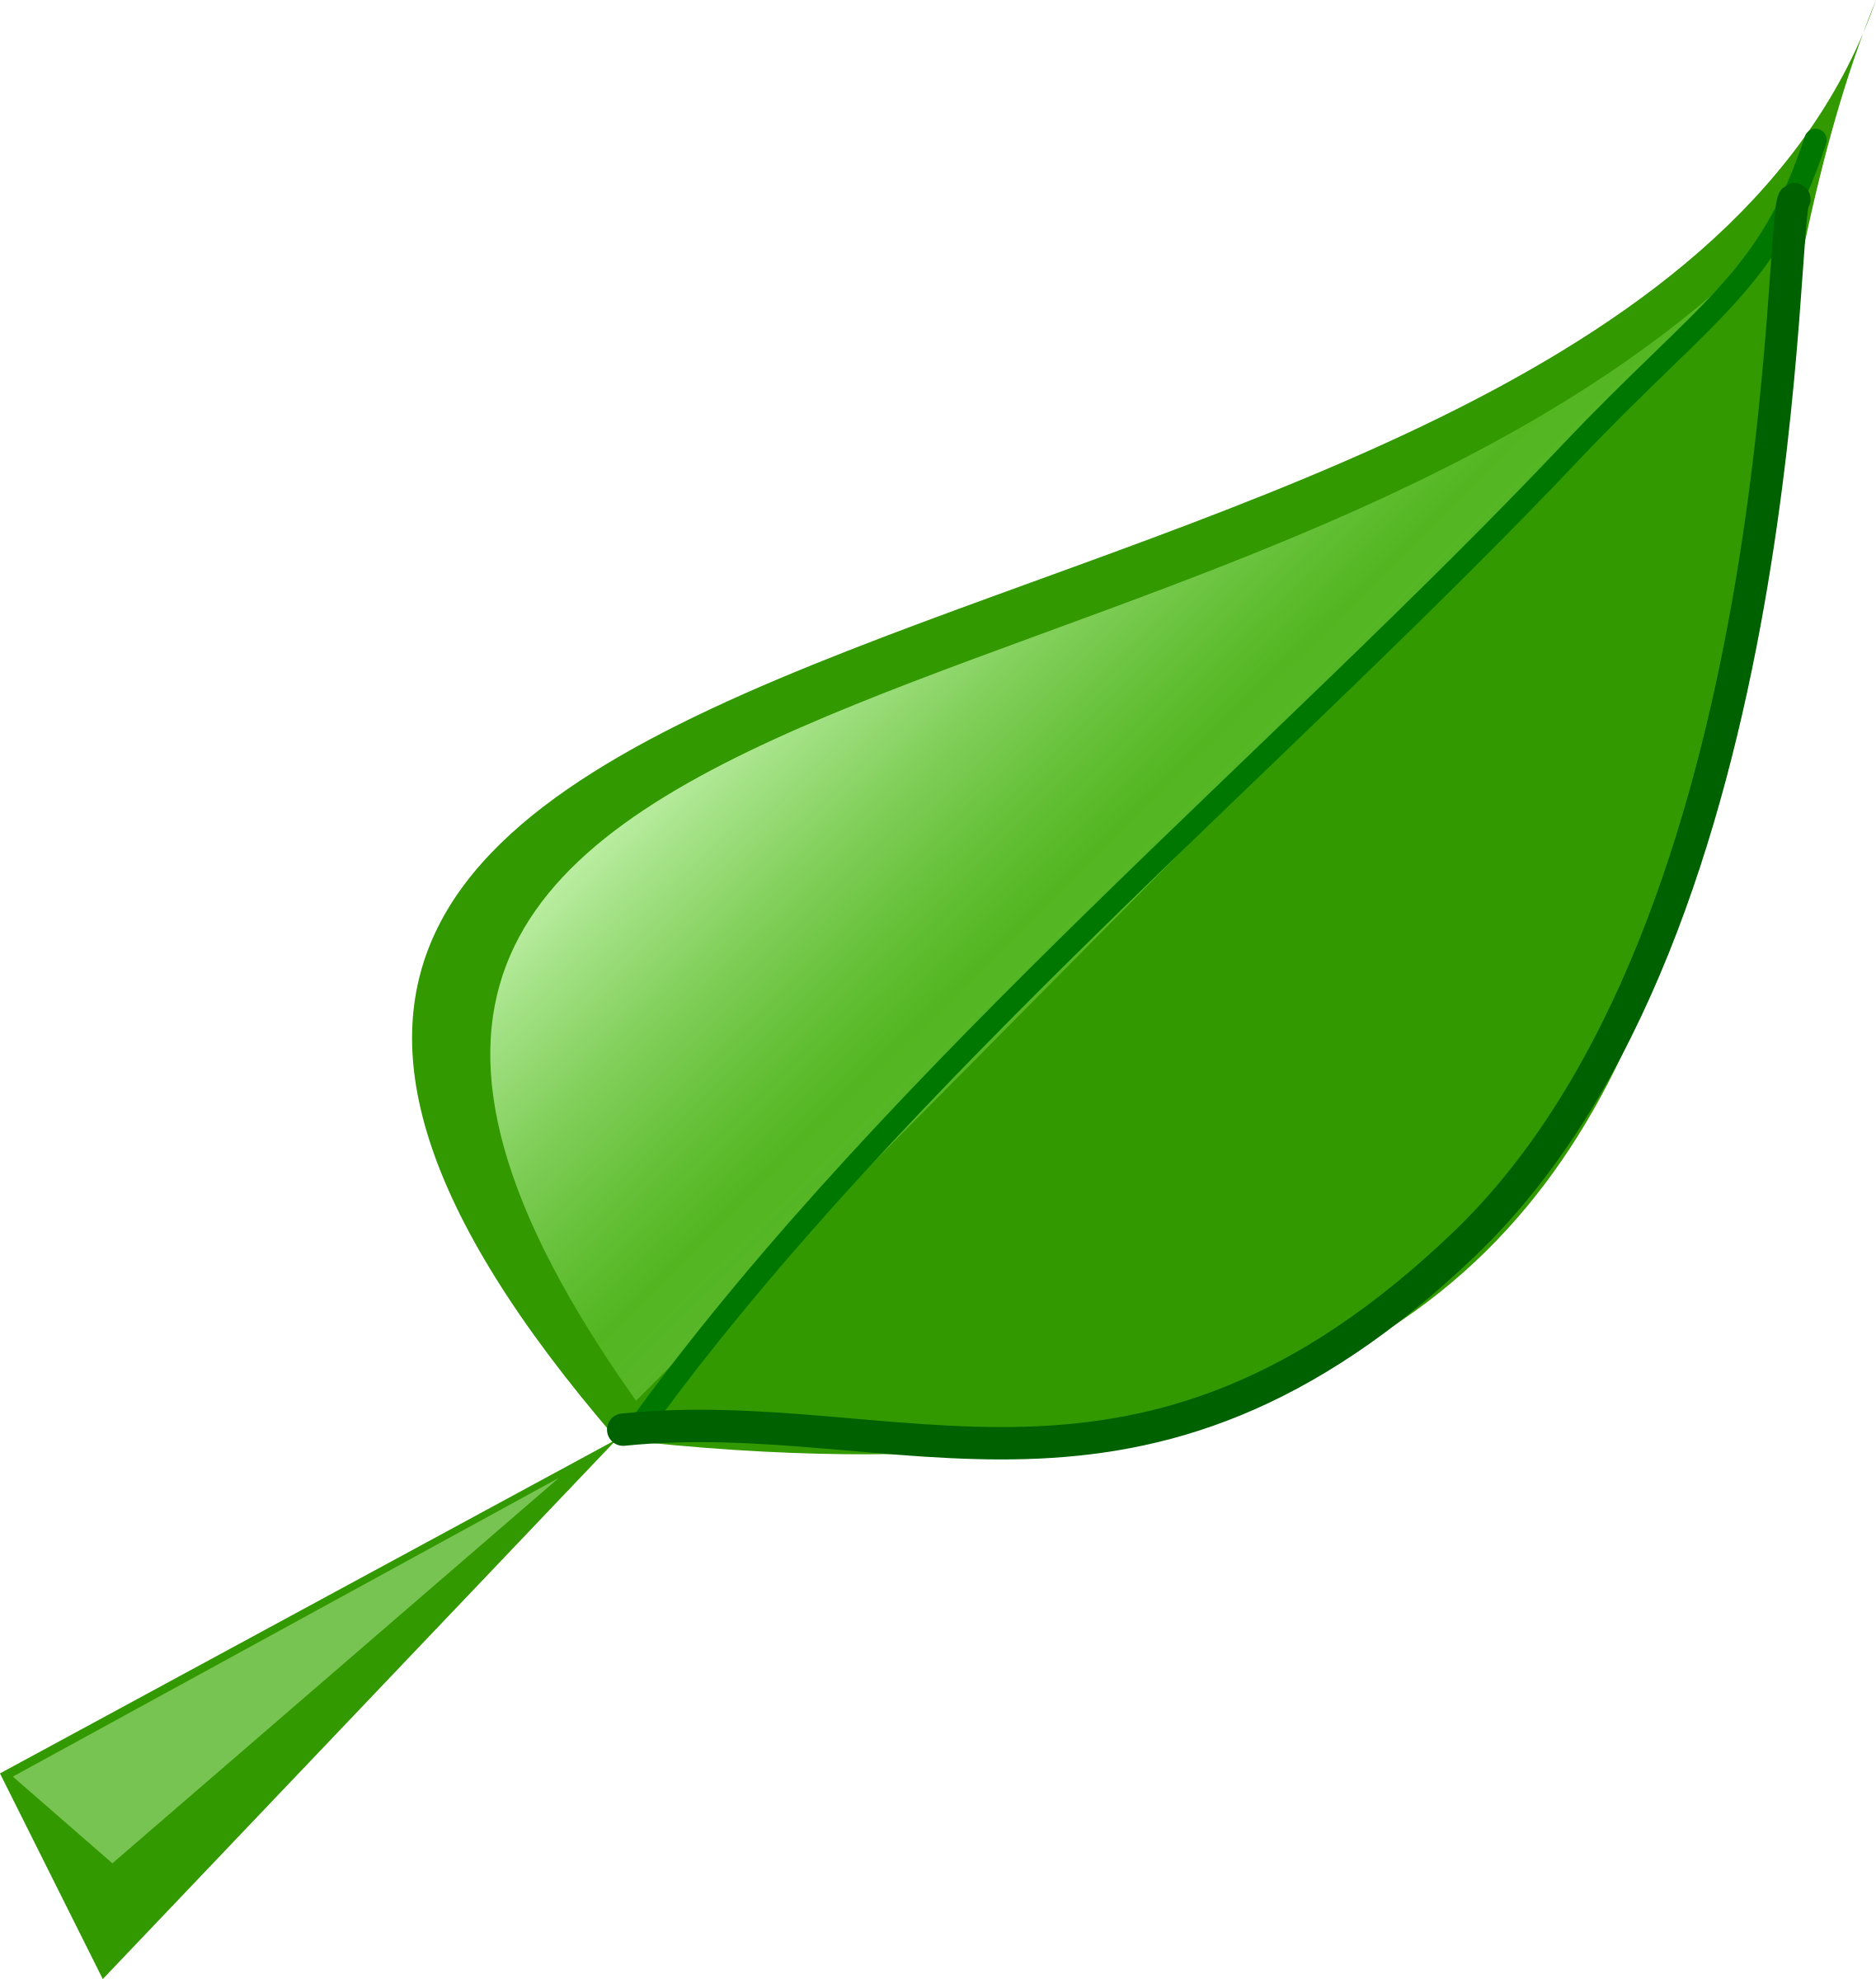 Of A Green Leaf - Leaf Clip Art, Find more high quality free transparent pn...